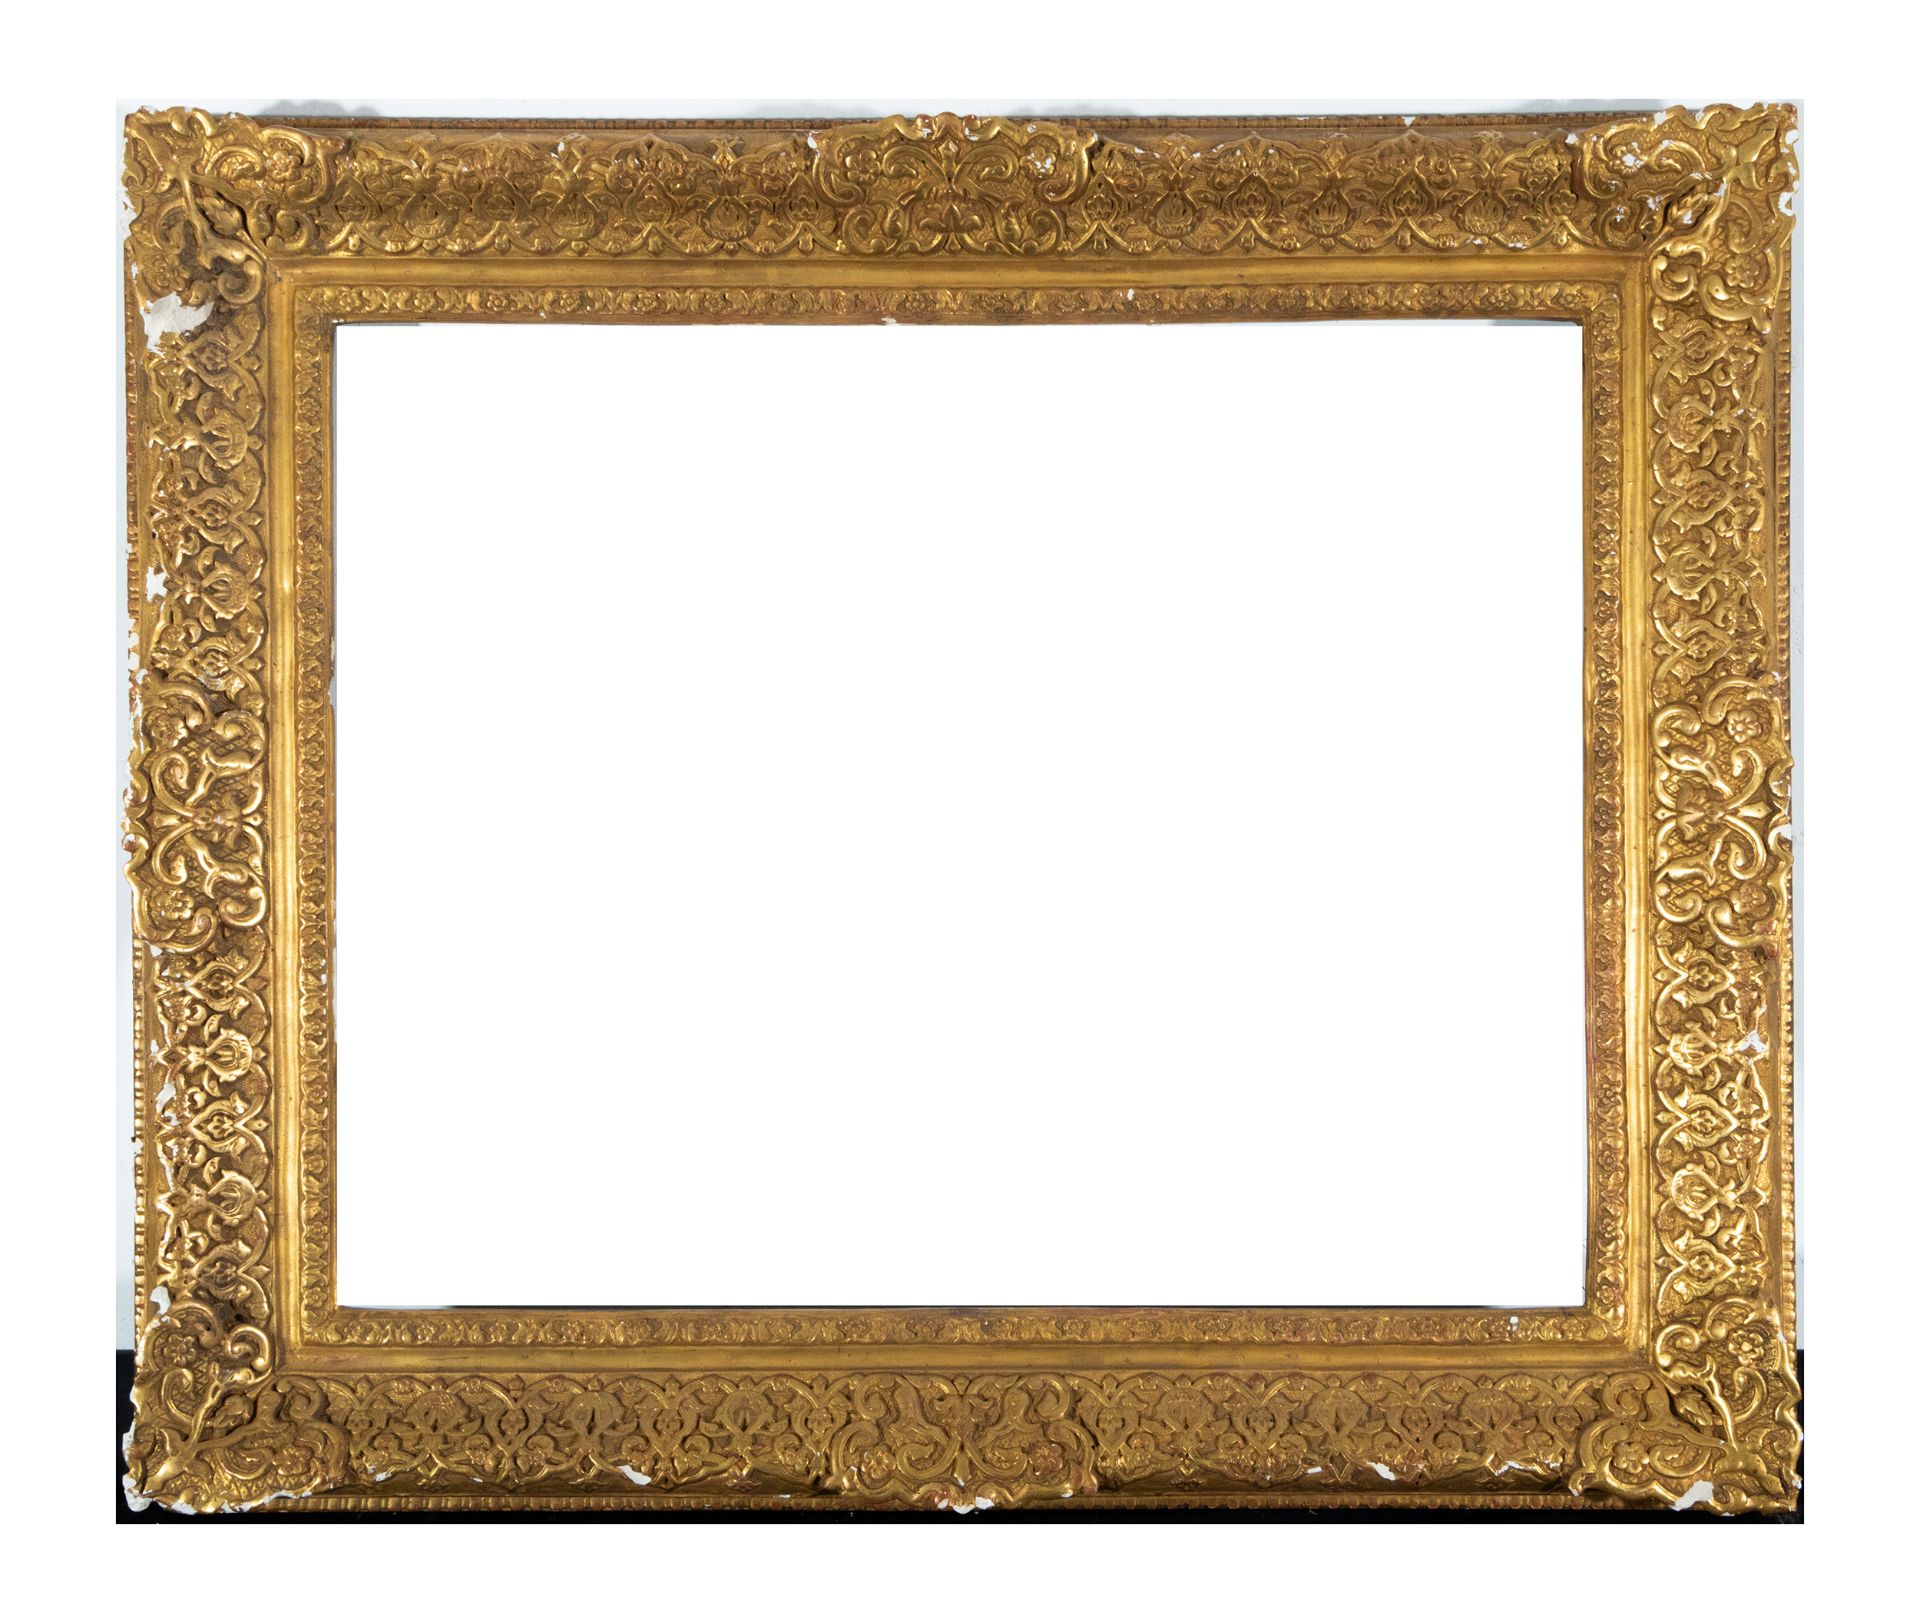 Golden Pasta frame with Florentine-style floral motifs, 19th century